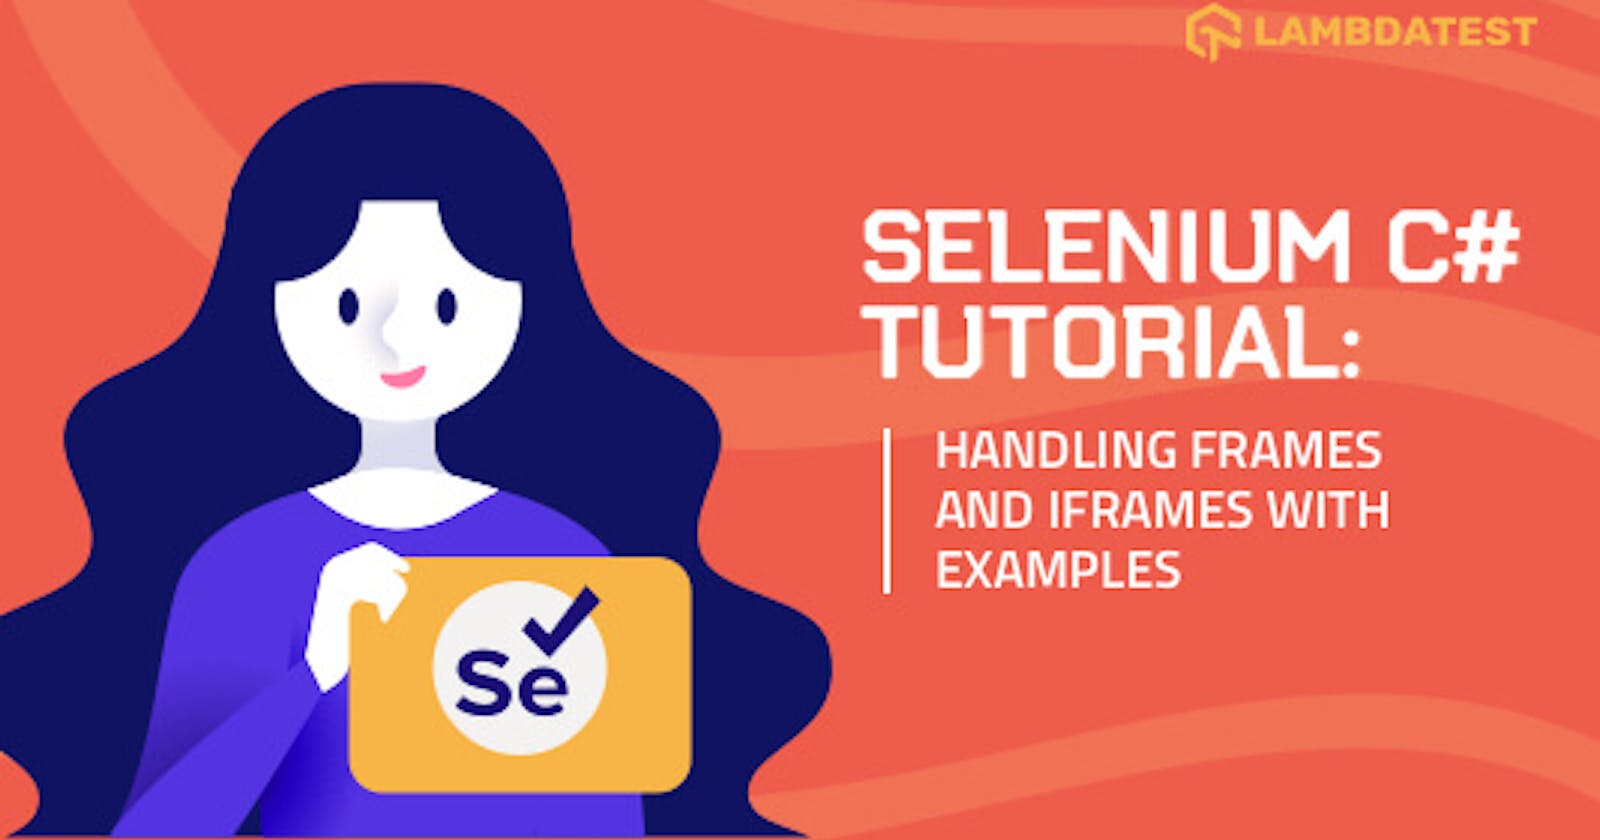 Selenium C# Tutorial: Handling Frames & iFrames With Examples